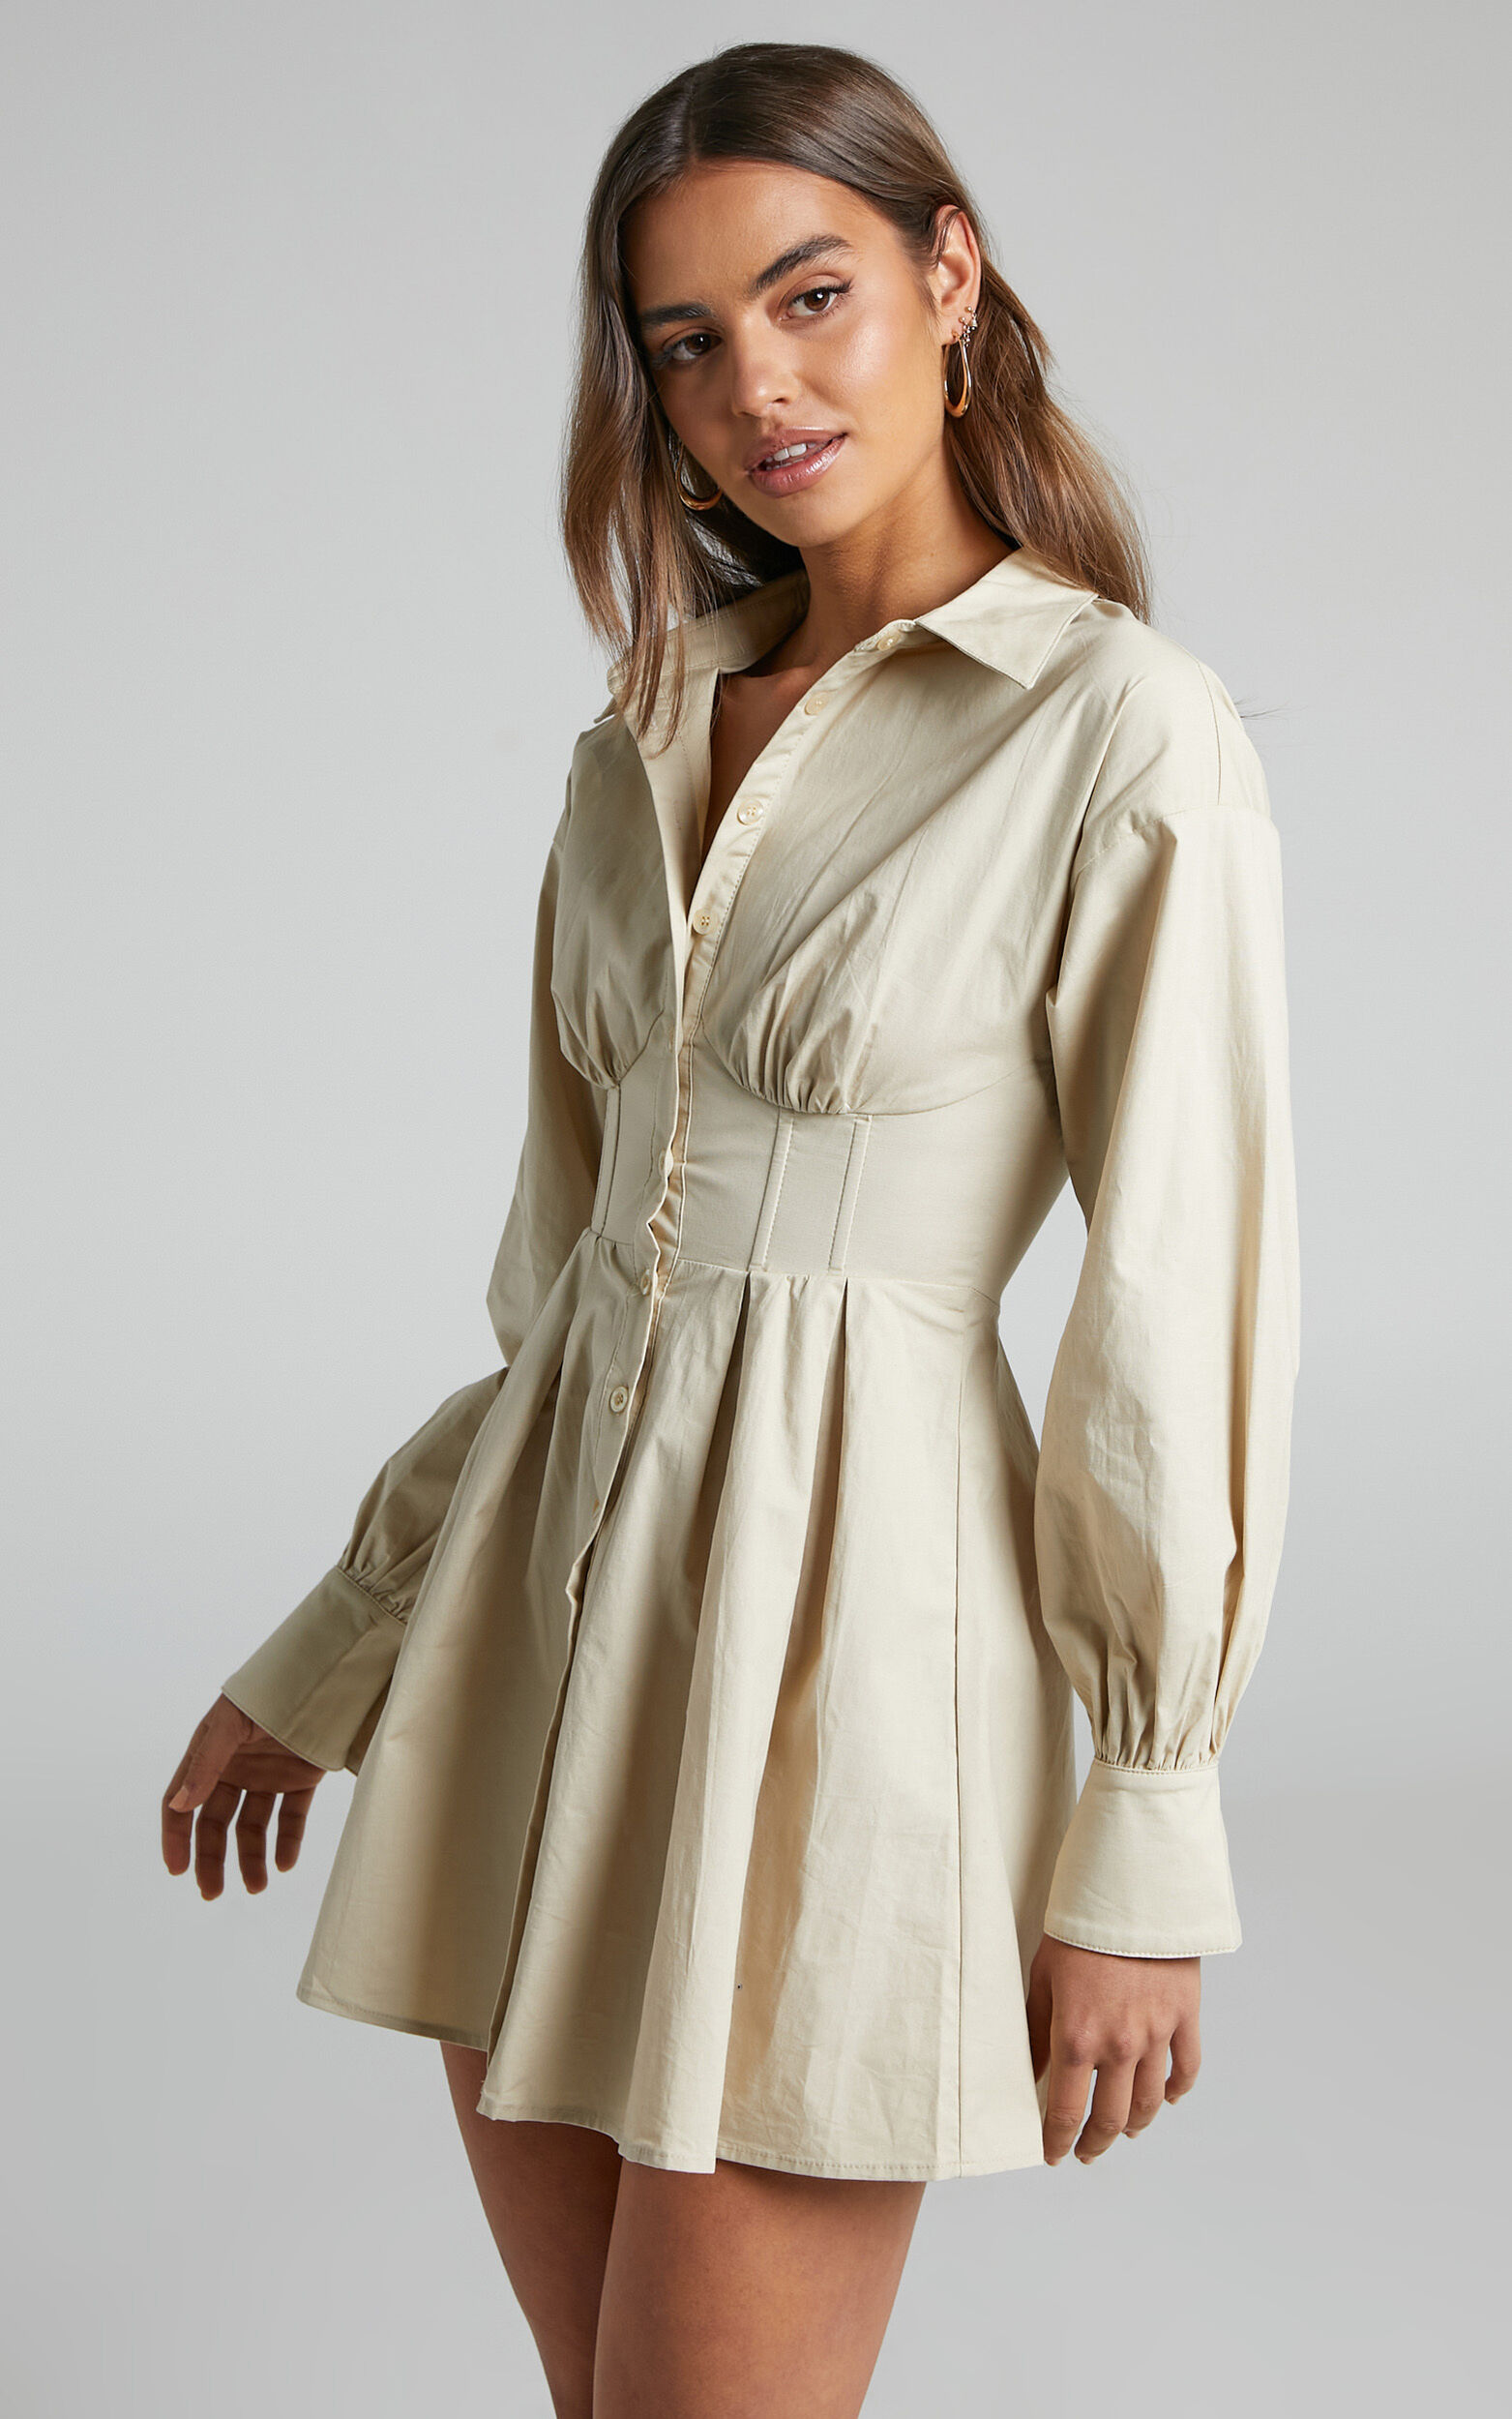 Claudette Mini Dress - Long Sleeve Corset Shirt Dress in Sand